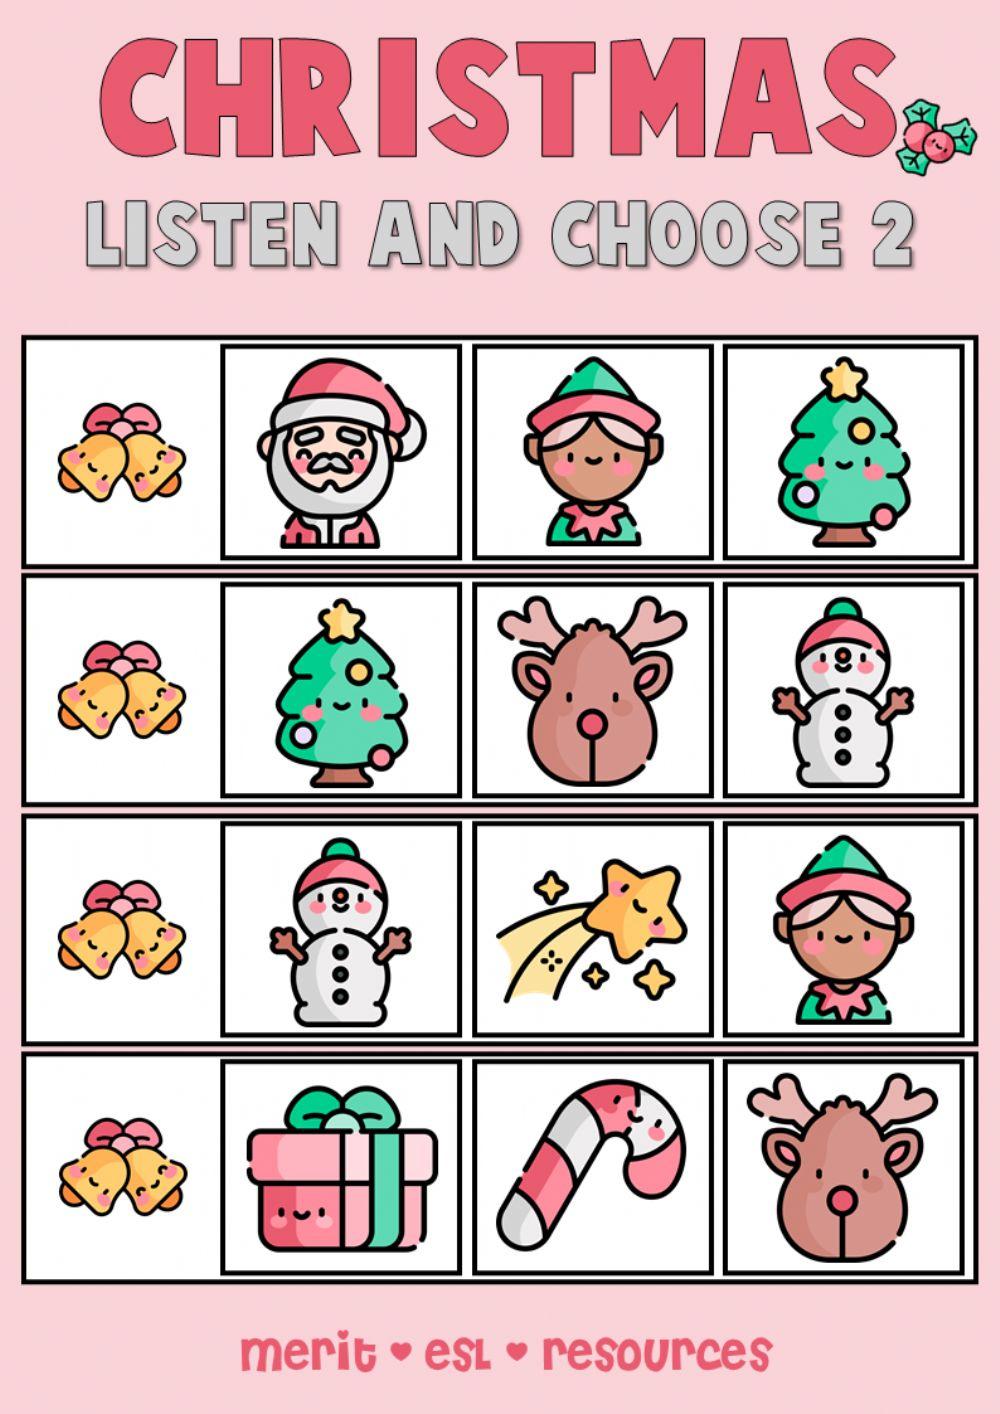 Christmas - Listen and choose 2